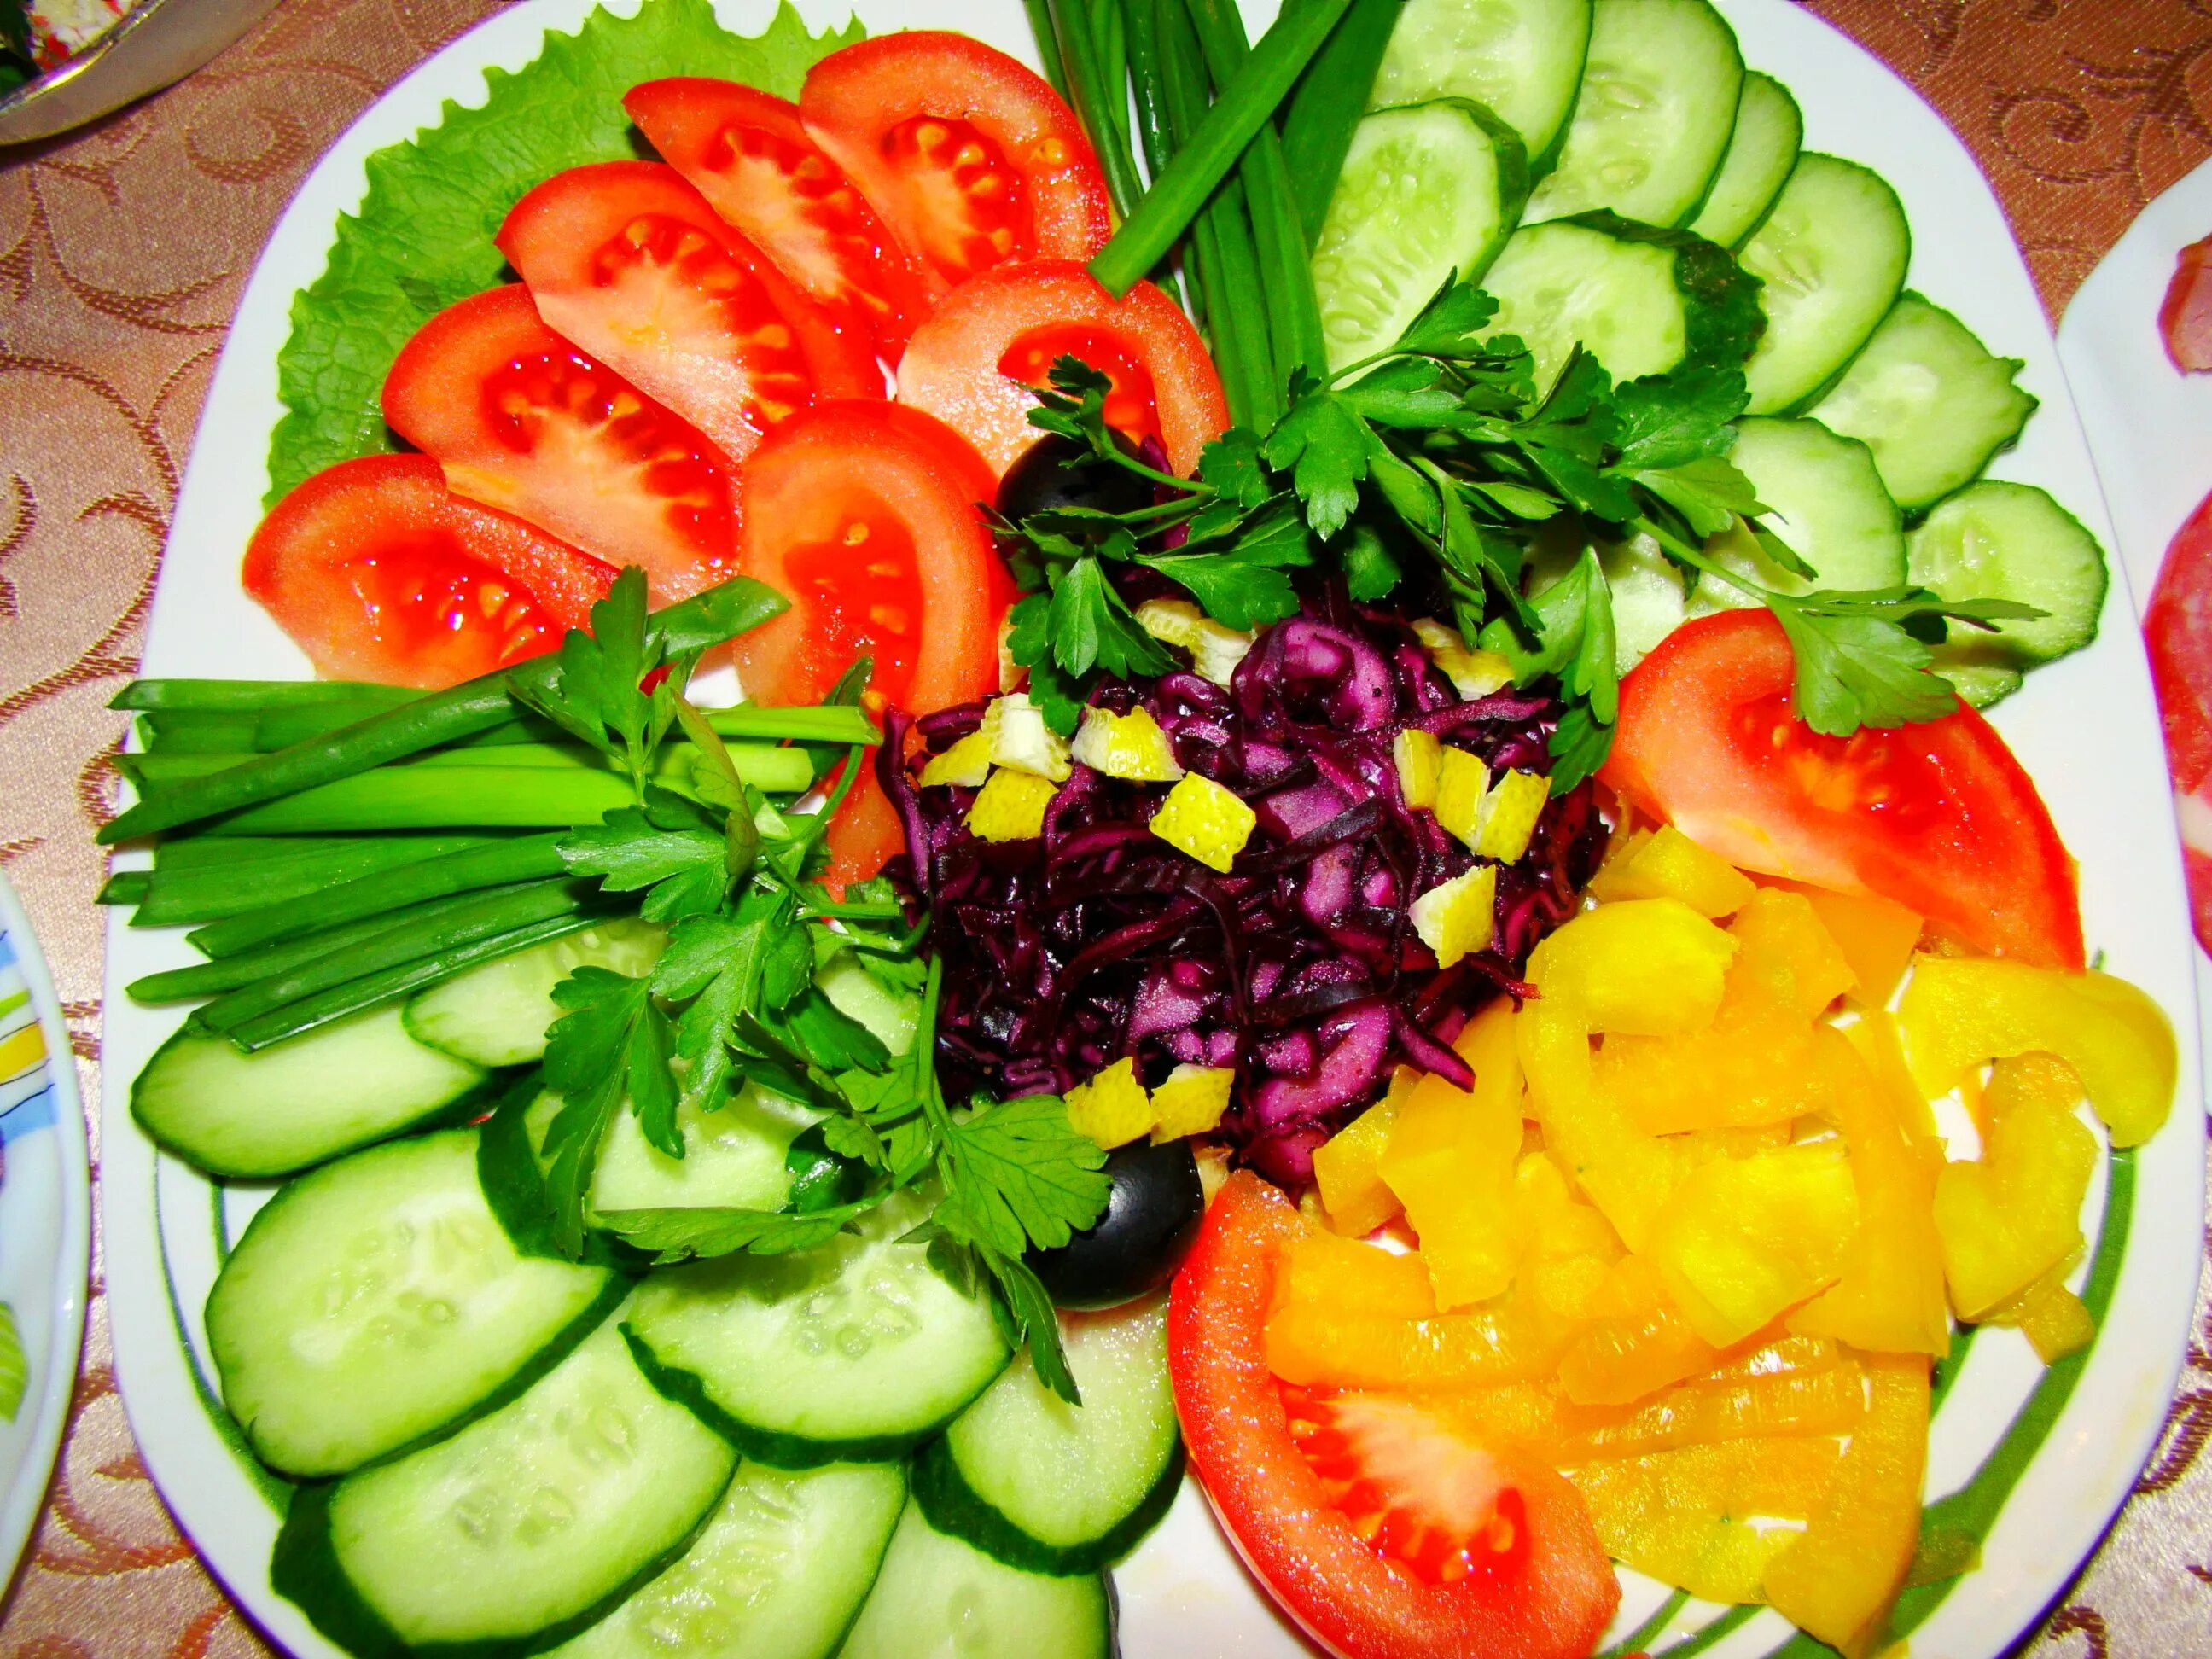 Нарезка огурца на стол. Овощная нарезка. Красивая нарезка овощей на стол. Красивые овощные нарезки. Нарезанные овощи.